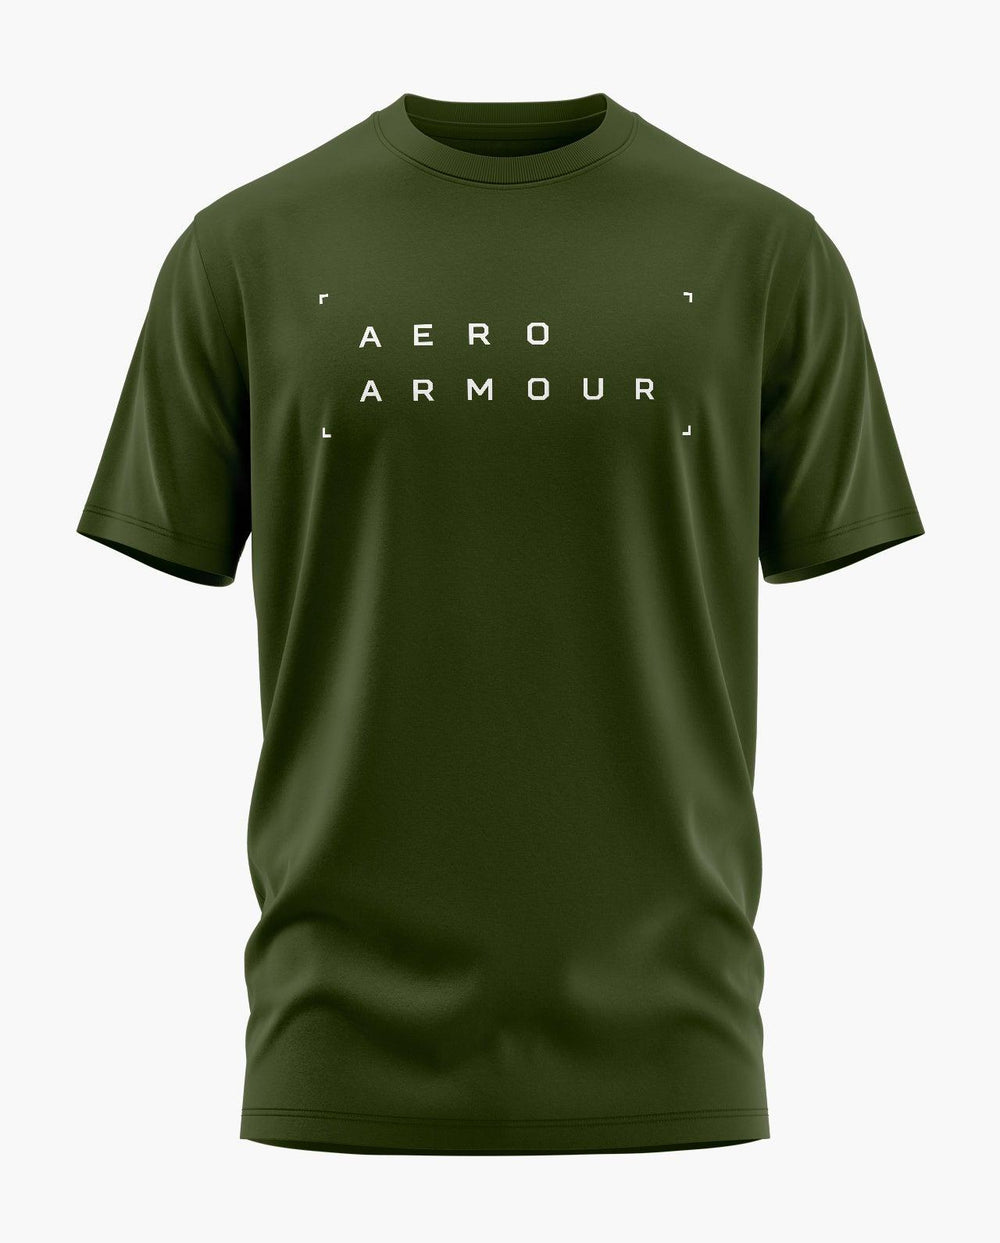 Aero Armour Focus T-Shirt - Aero Armour